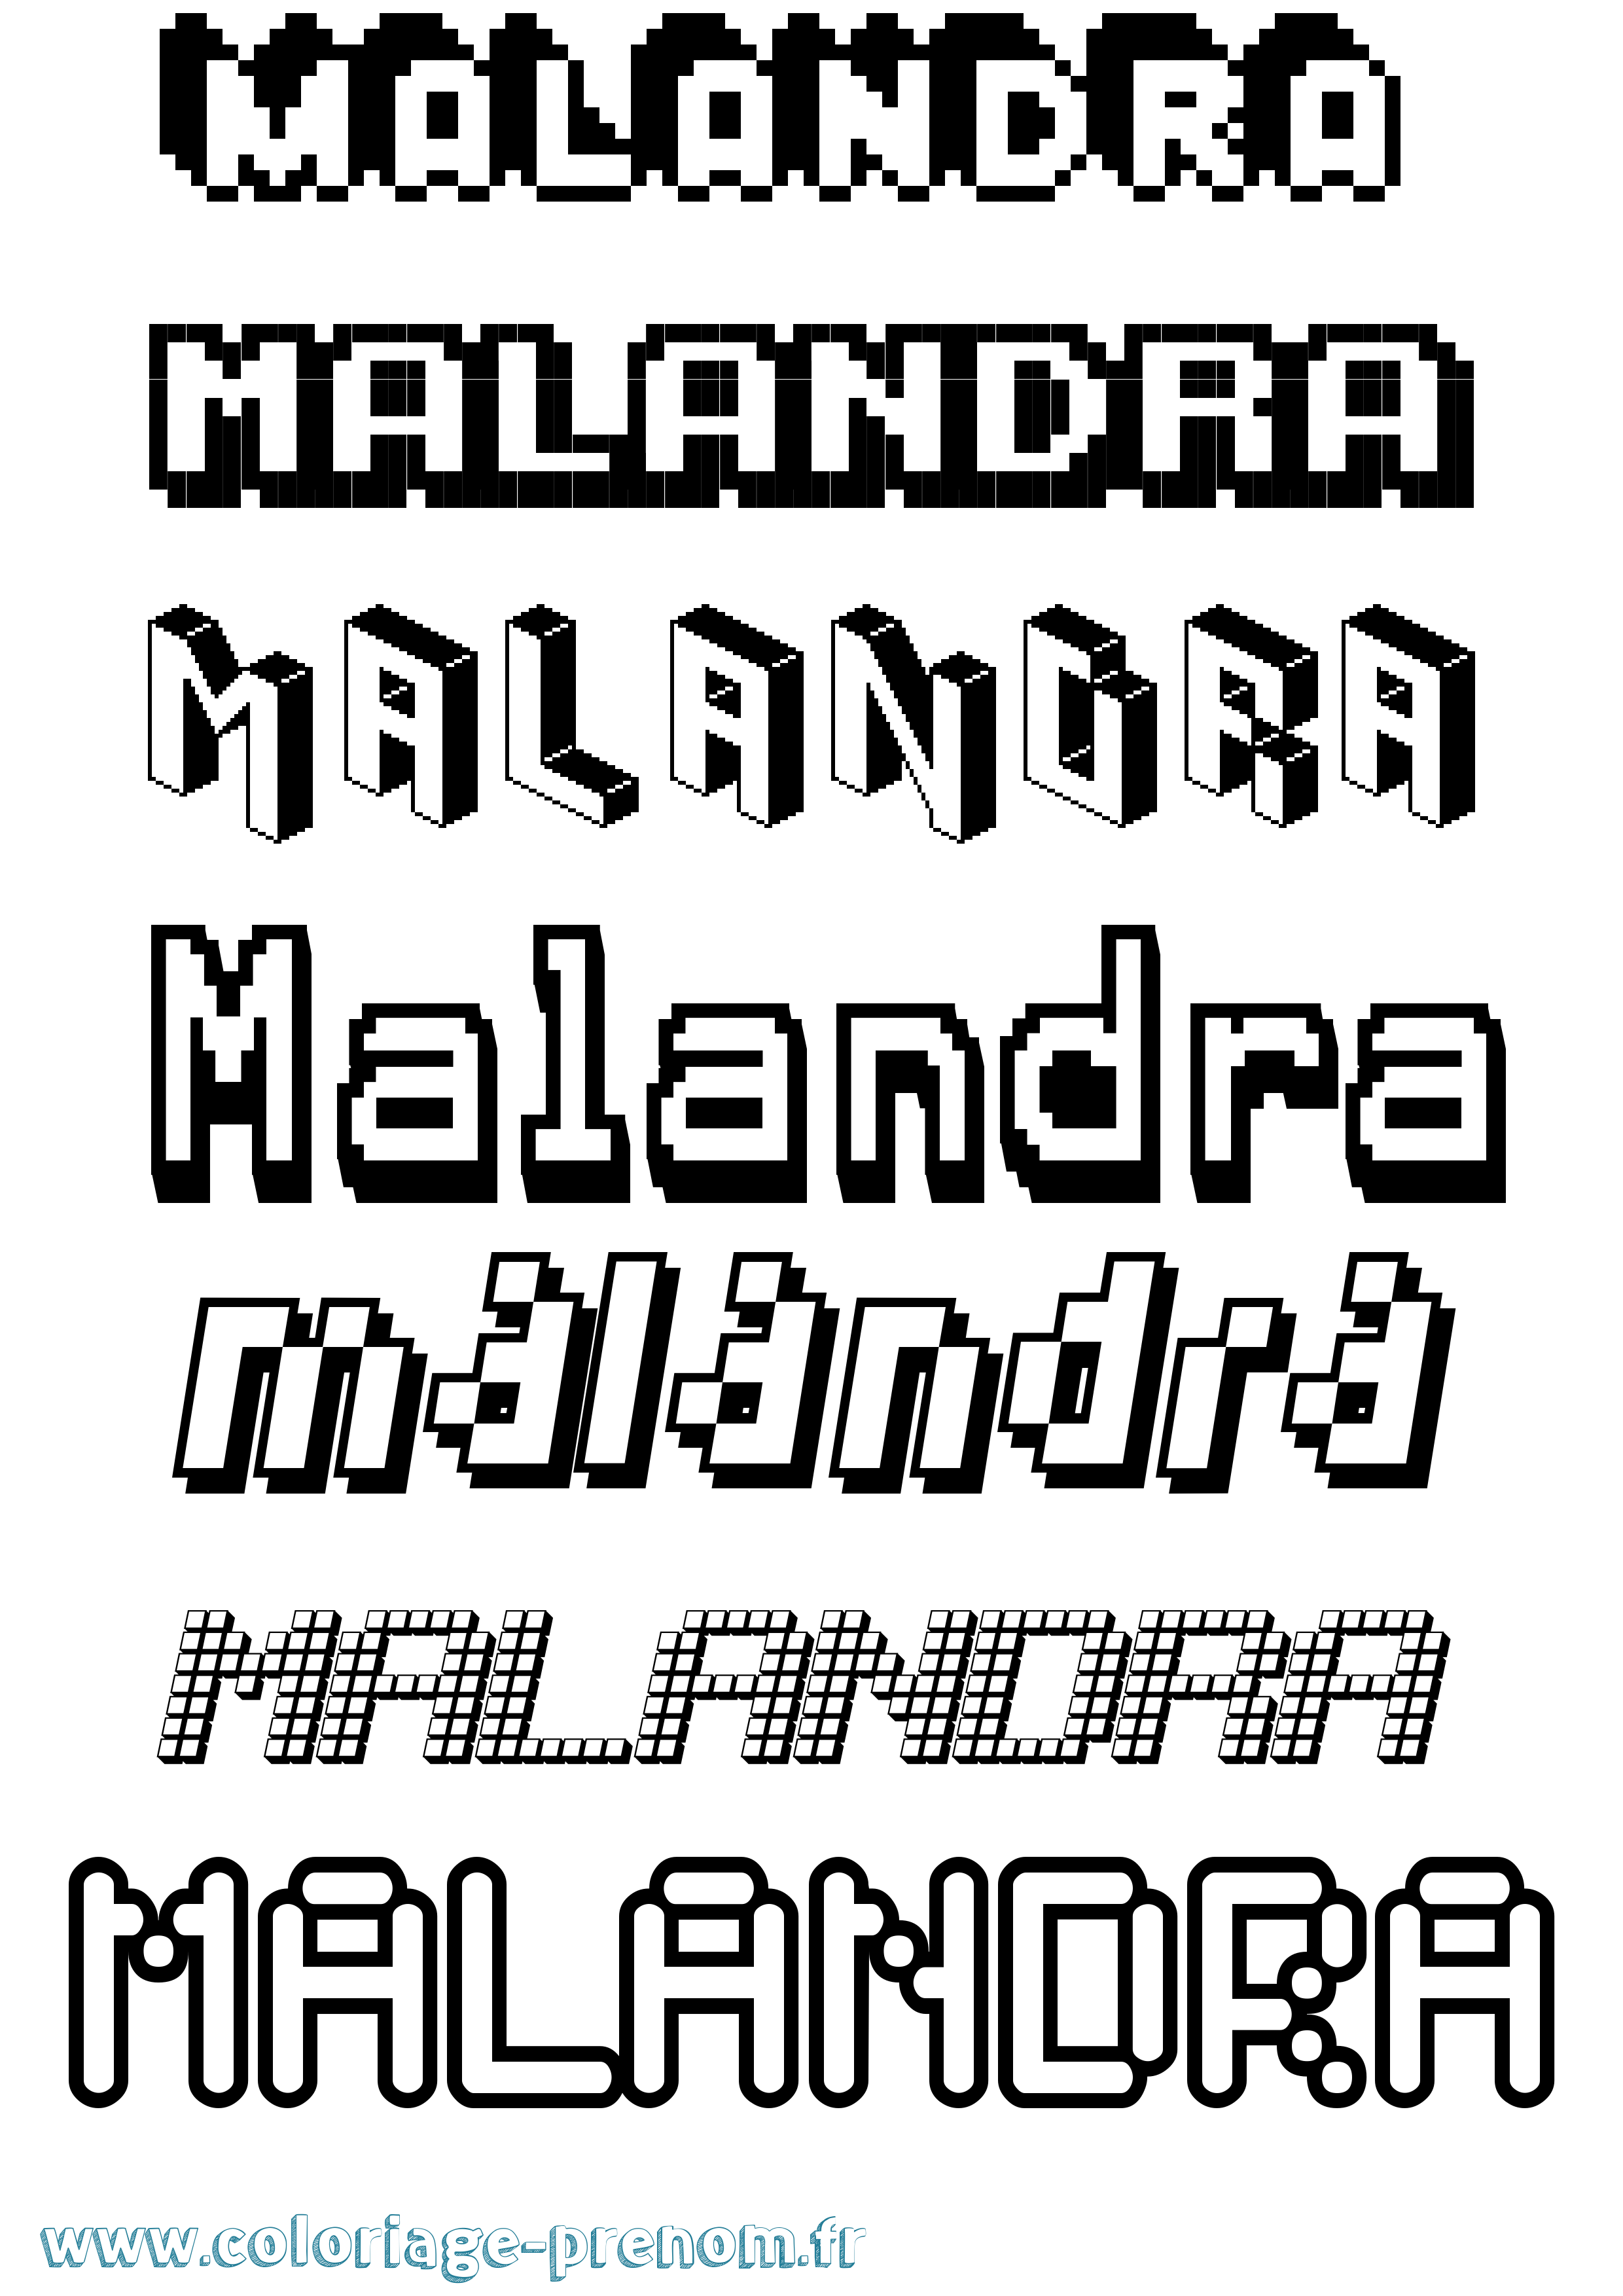 Coloriage prénom Malandra Pixel